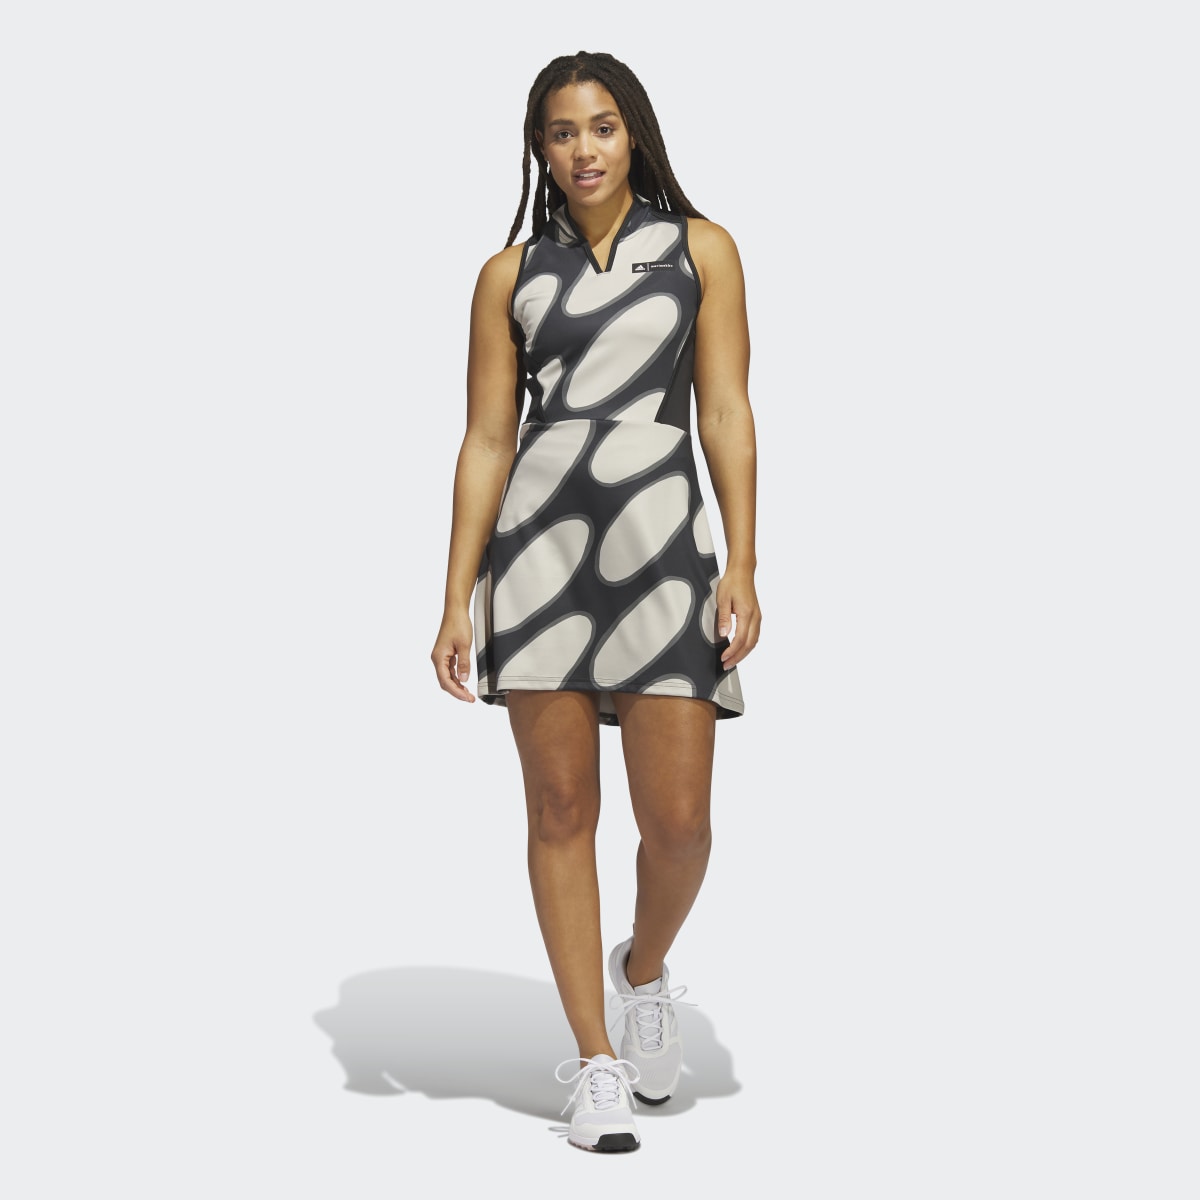 Adidas Marimekko Golf Dress. 11